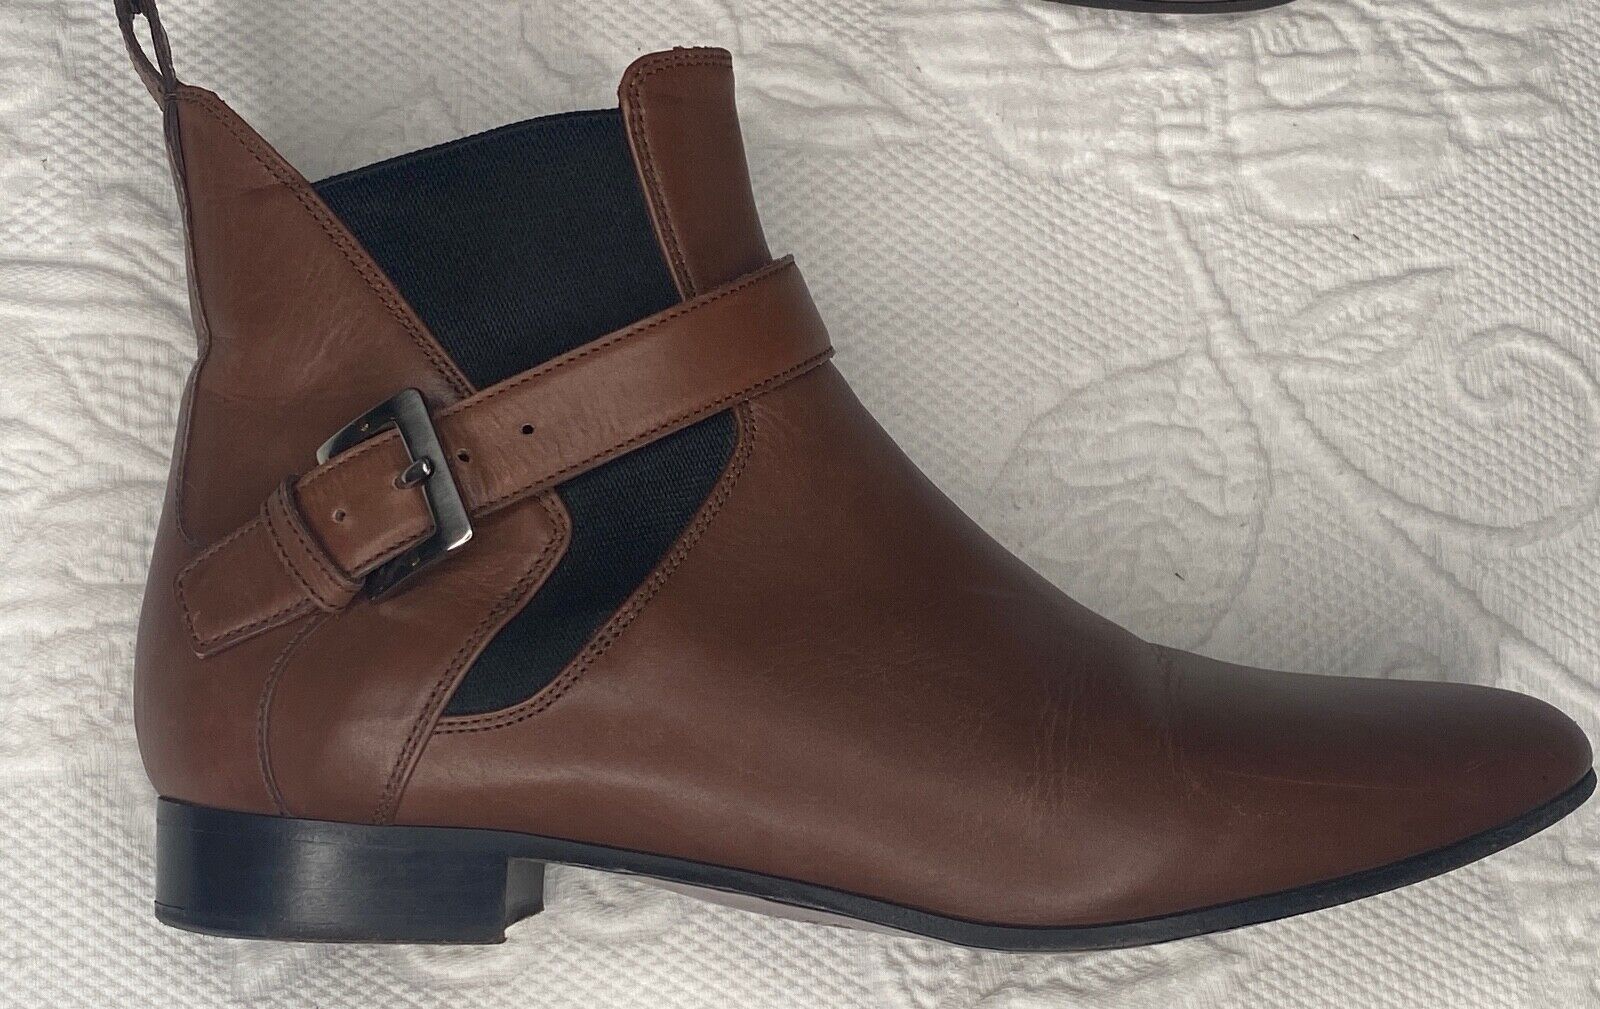 Miu Miu Ankle/Chelsea Boots Brown, Size 37 1/2 (US 6.5)  | eBay | eBay US